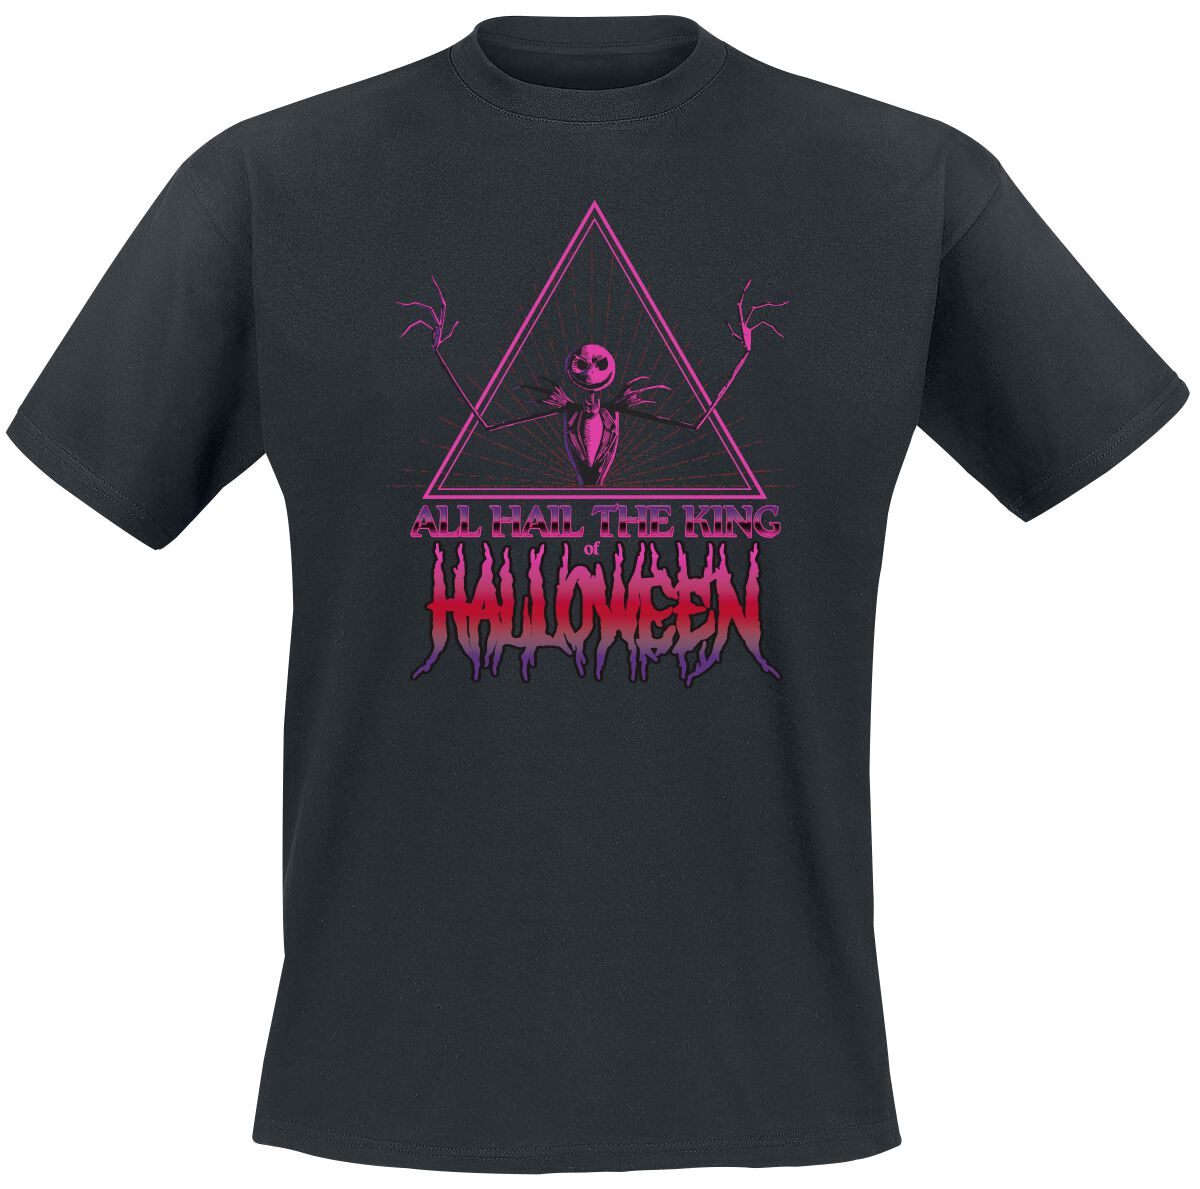 The Nightmare Before Christmas Halloween King T-Shirt schwarz in M